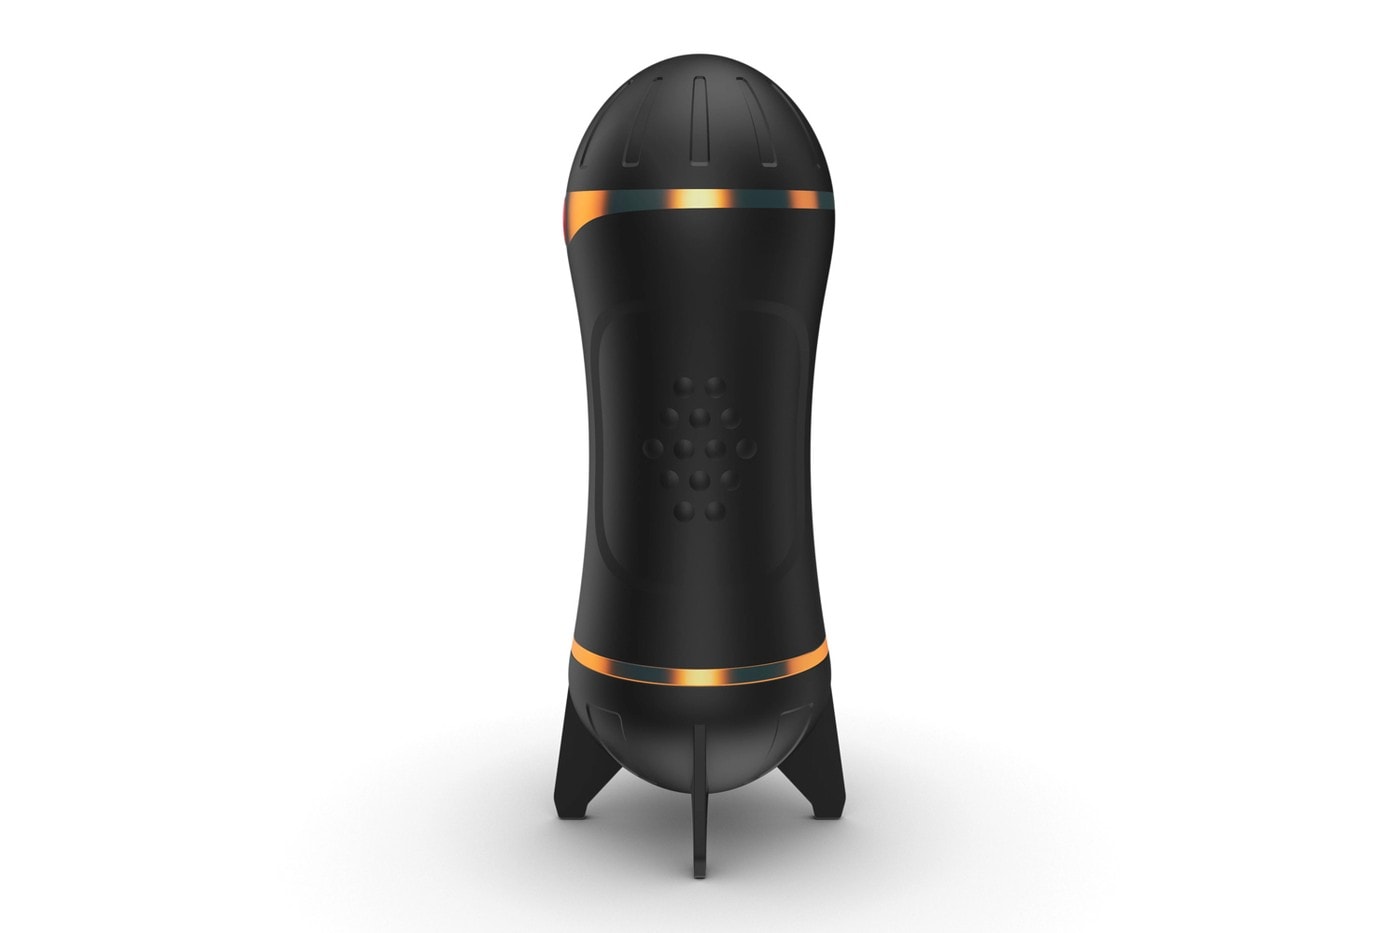 Tracy’s Dog 推出全新火箭造型「高科技」男性情趣玩具